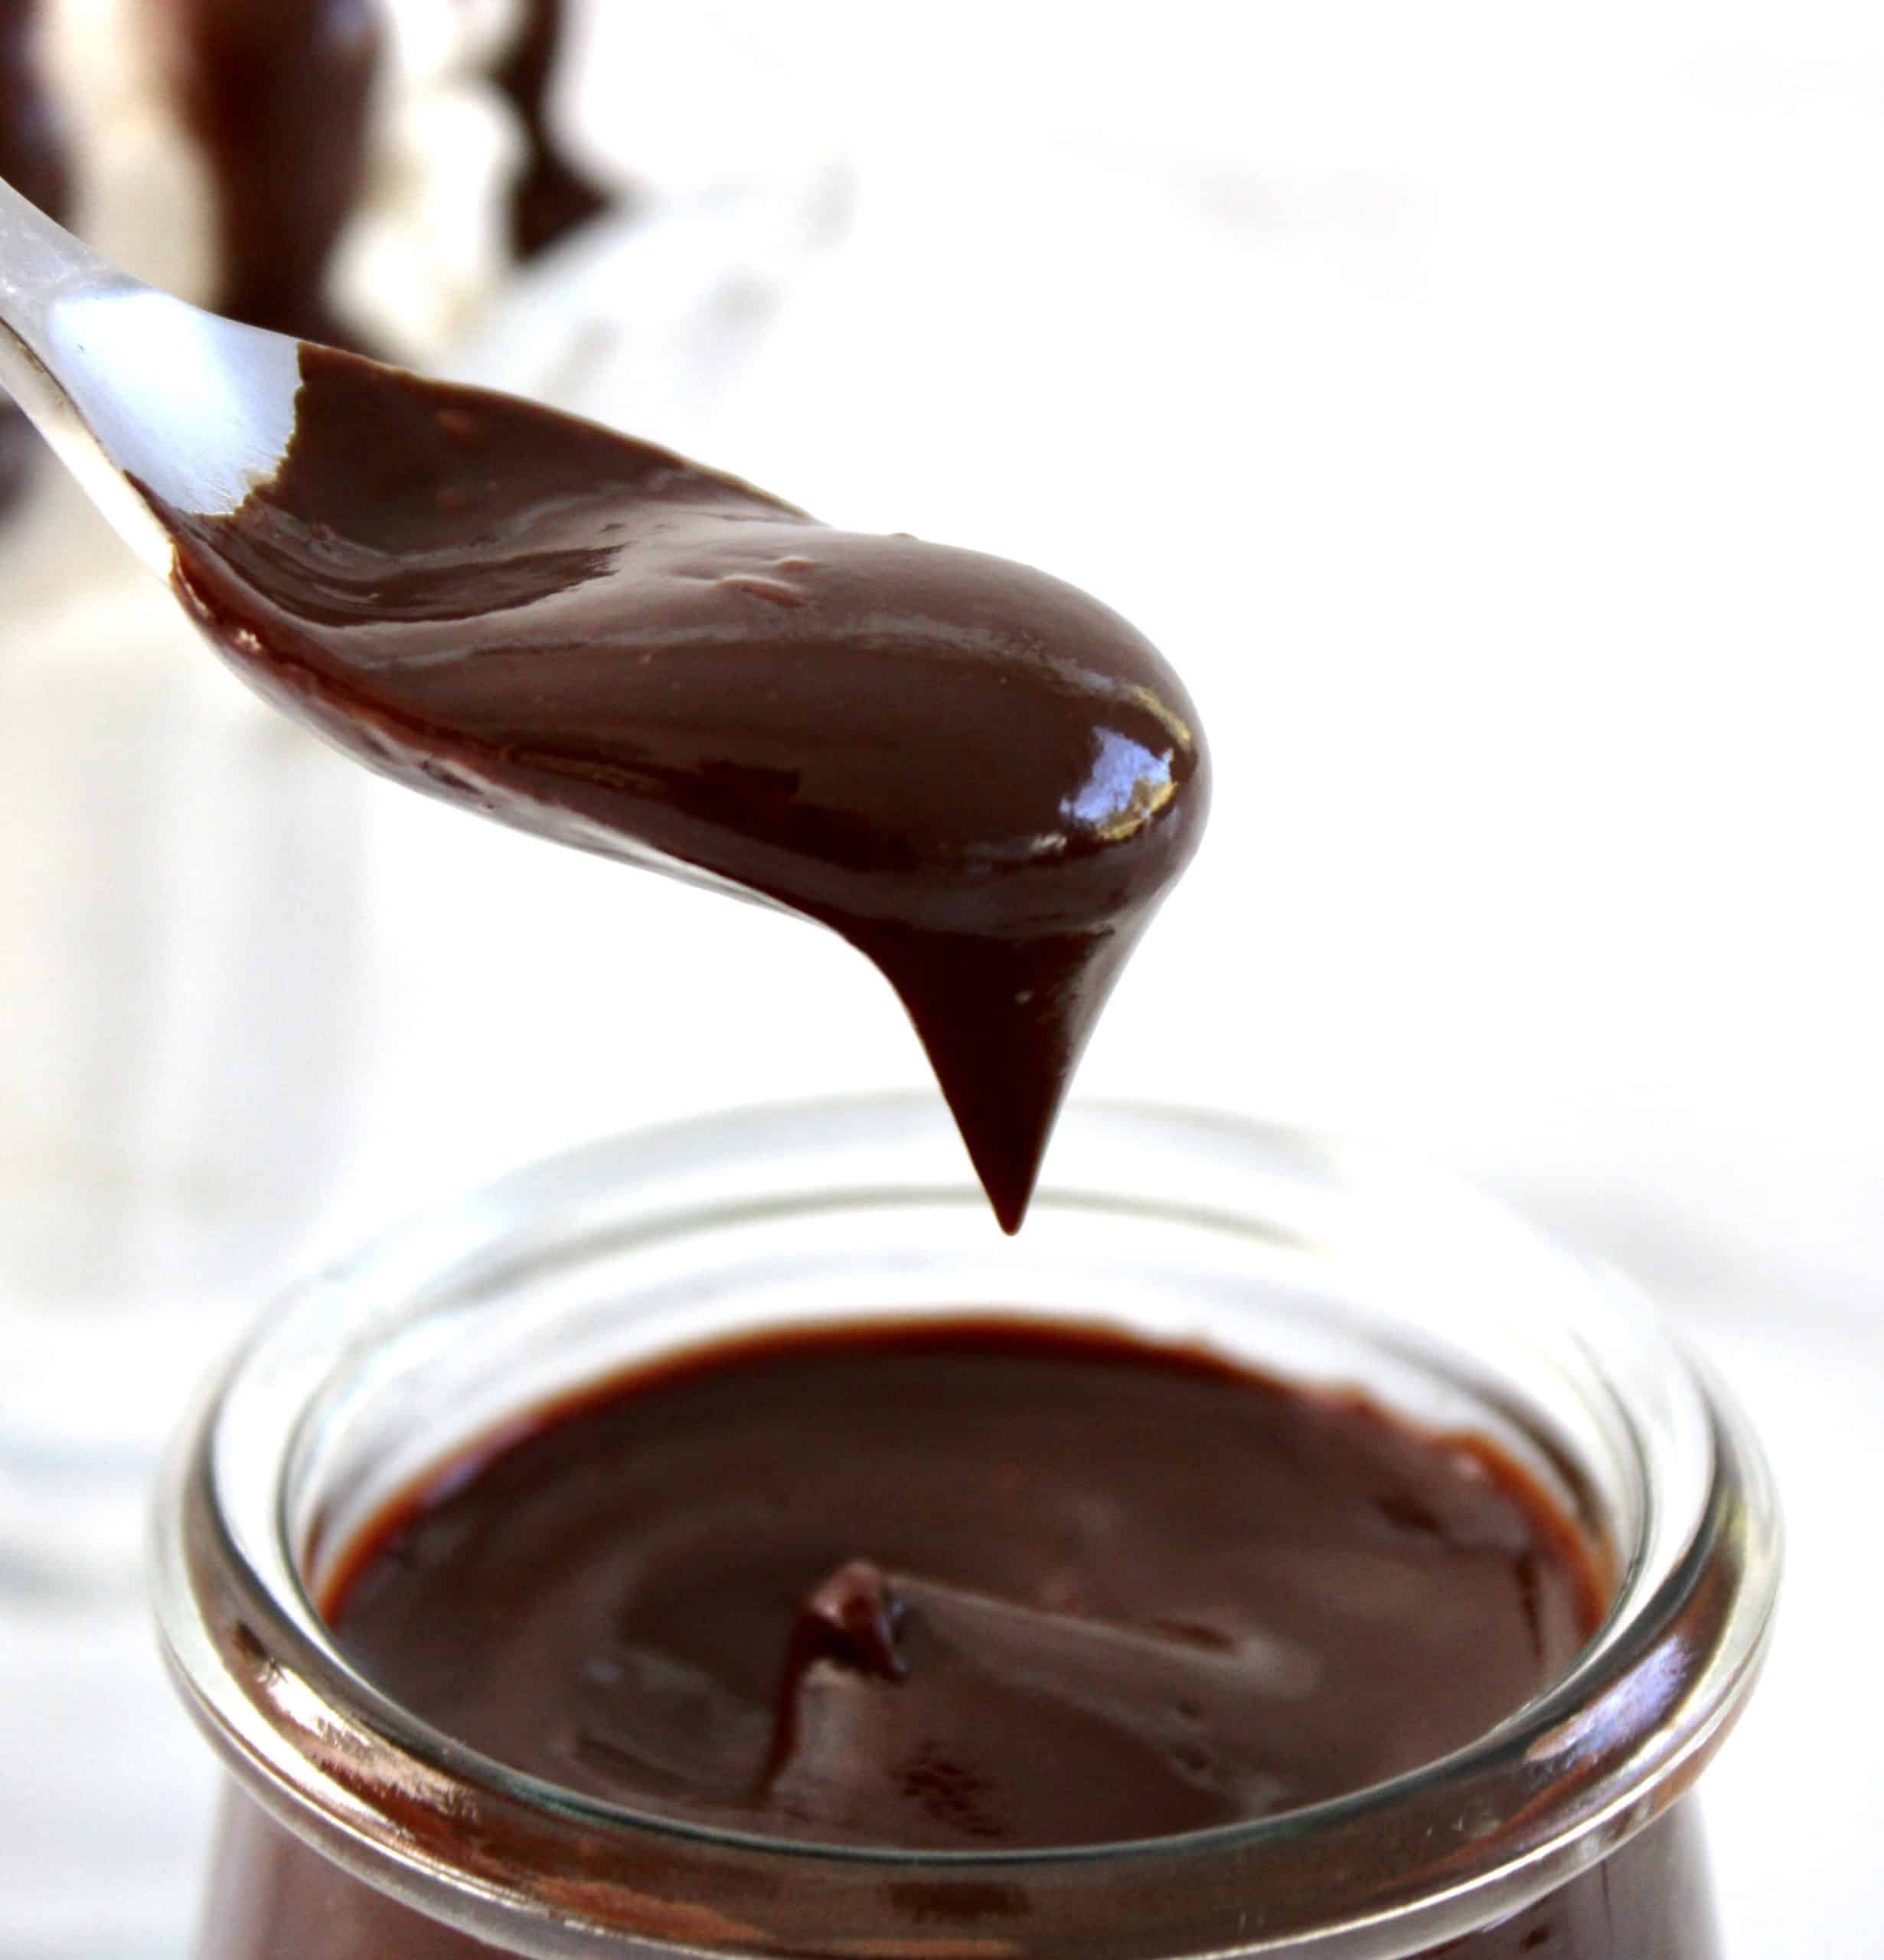 Keto Chocolate Sauce dripping off spoon